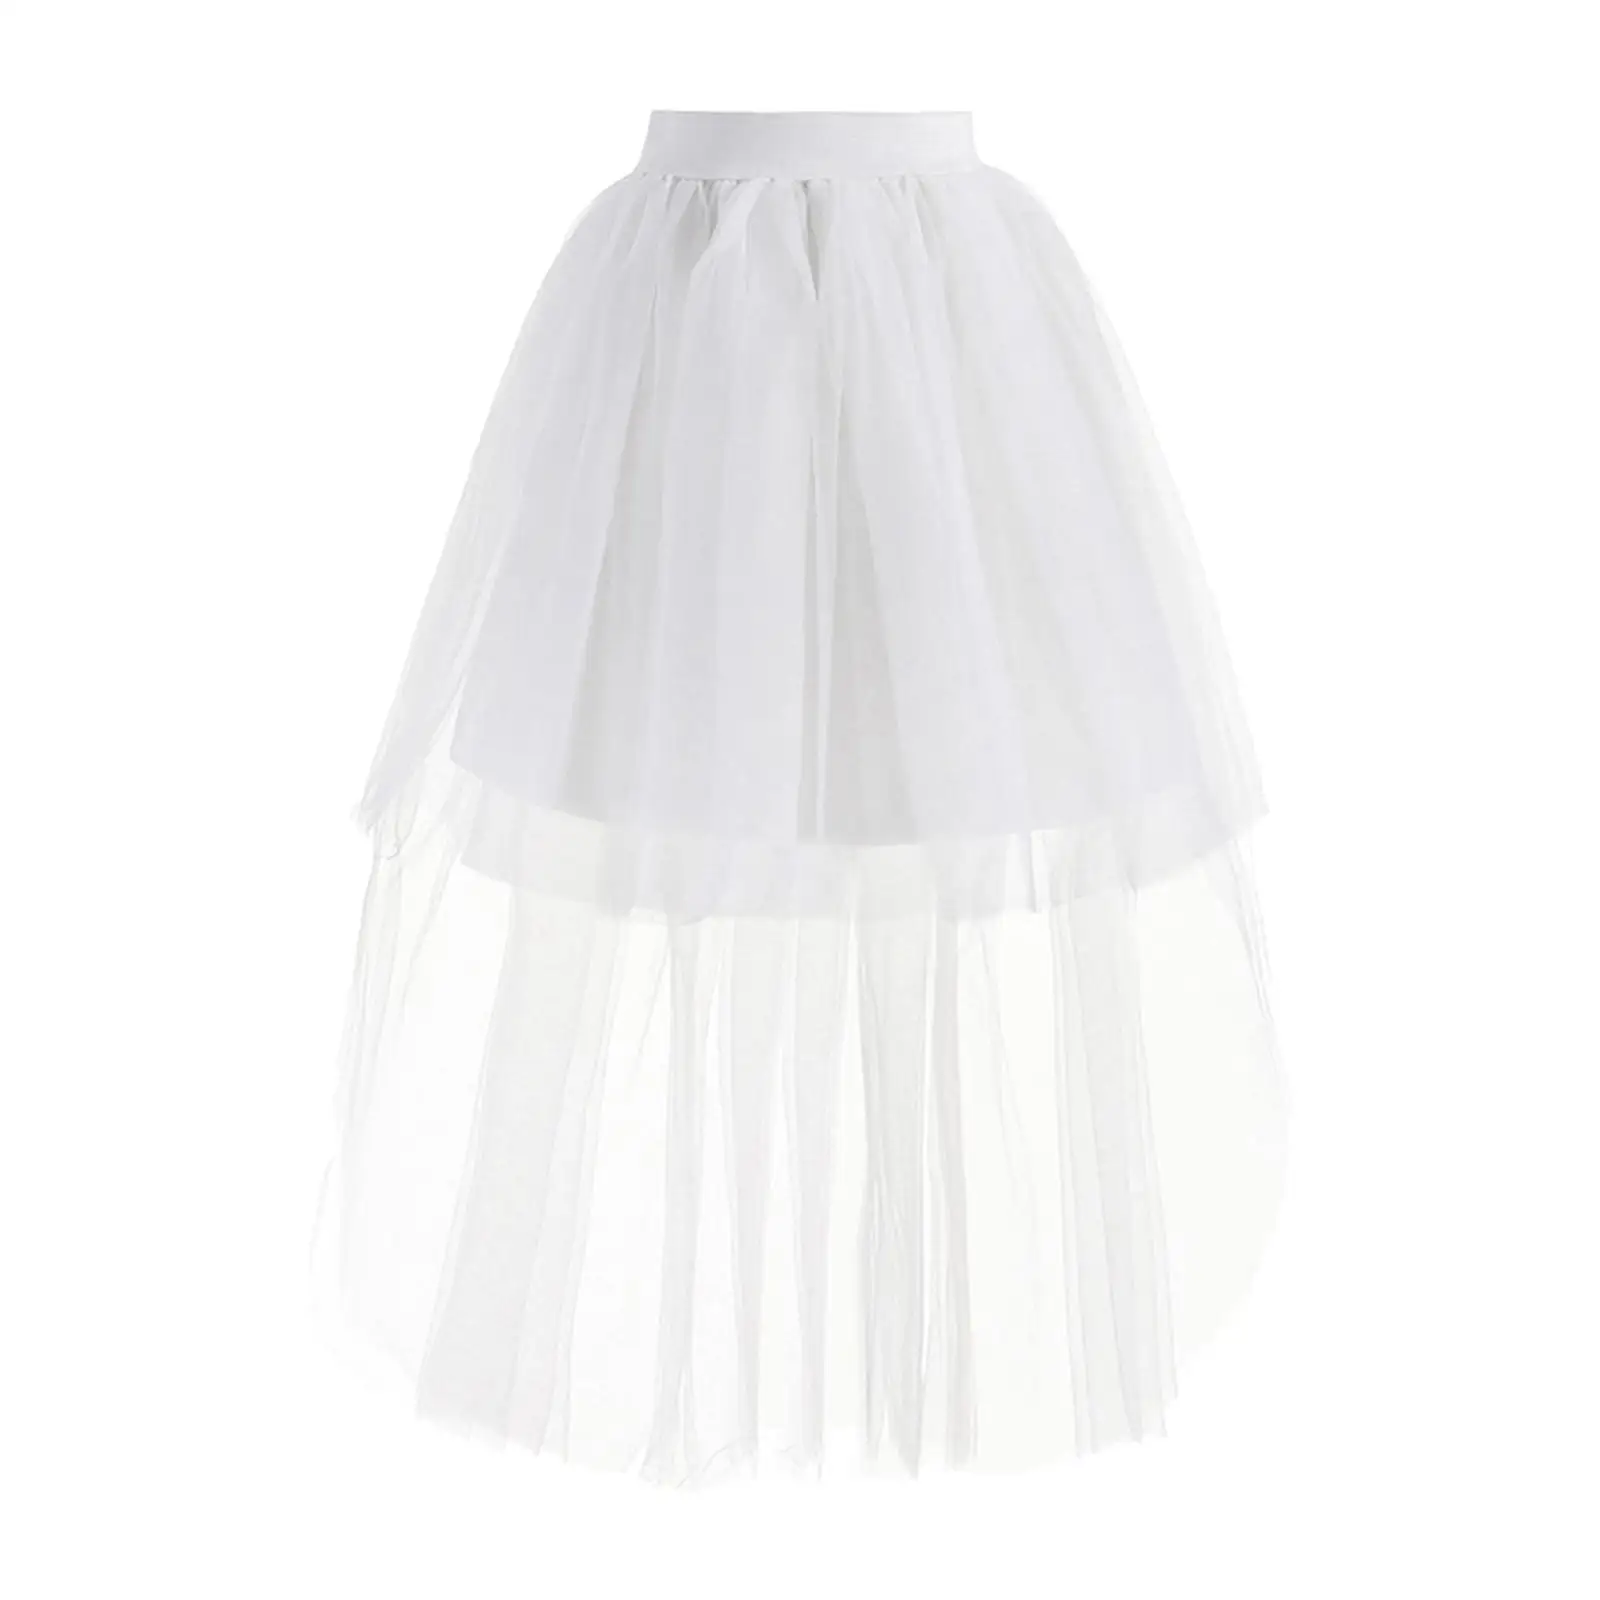 Women Tutu Tulle Skirt Layered MIDI Skirt Elastic High Waist Overlay Maxi Skirt Cocktail Proms Wedding Formal Adult Bridal Girls